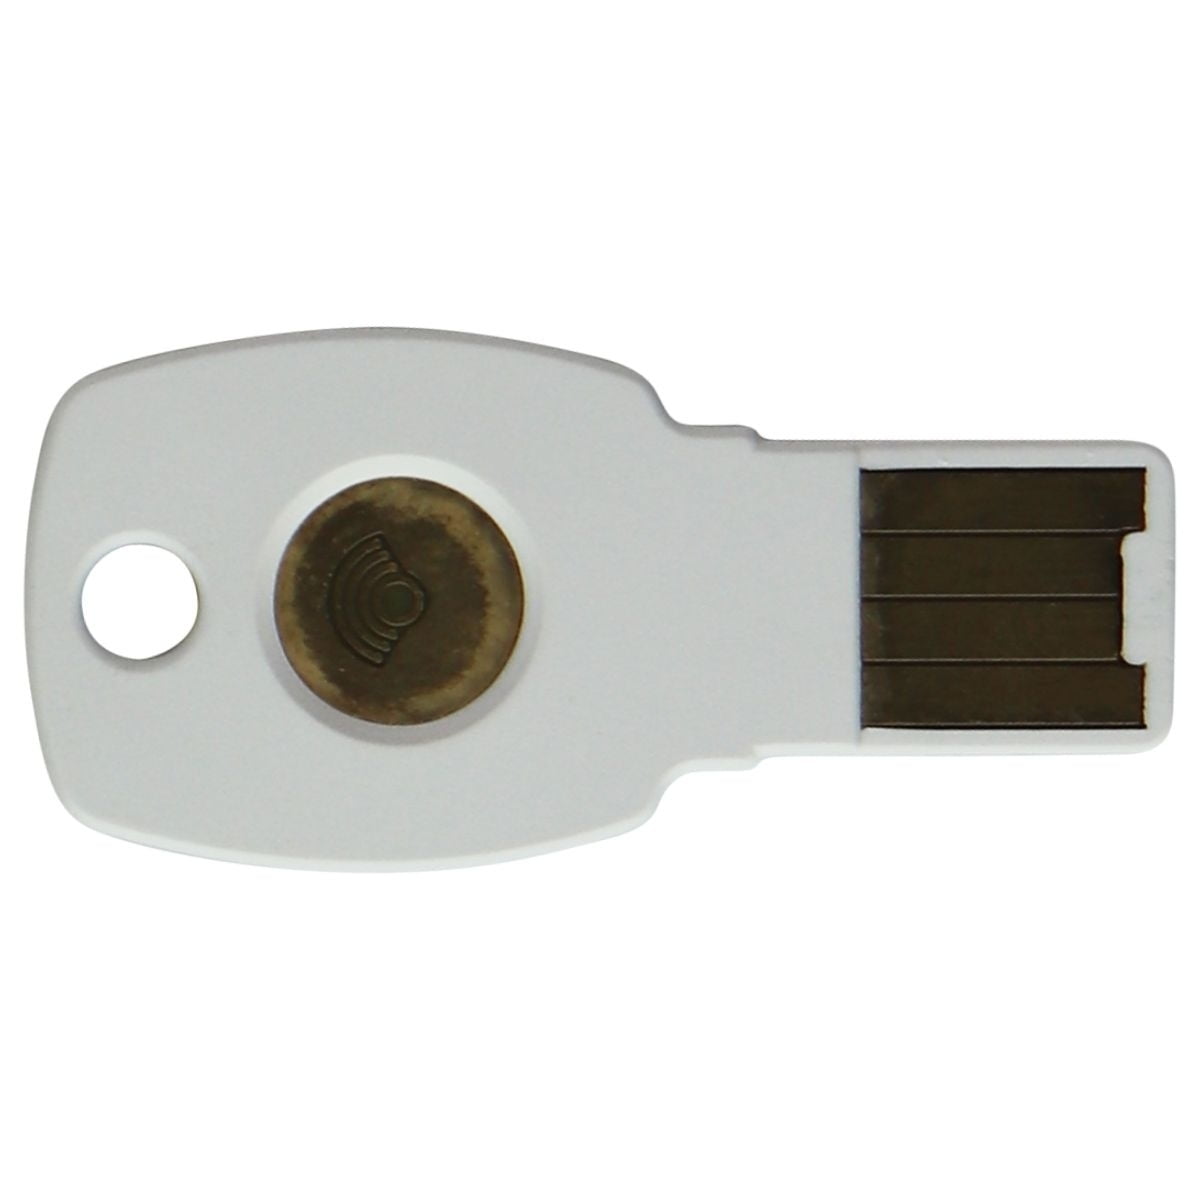 Google Titan Security Key USB (K9T) Bluetooth Security Key (K13T) Bundle 